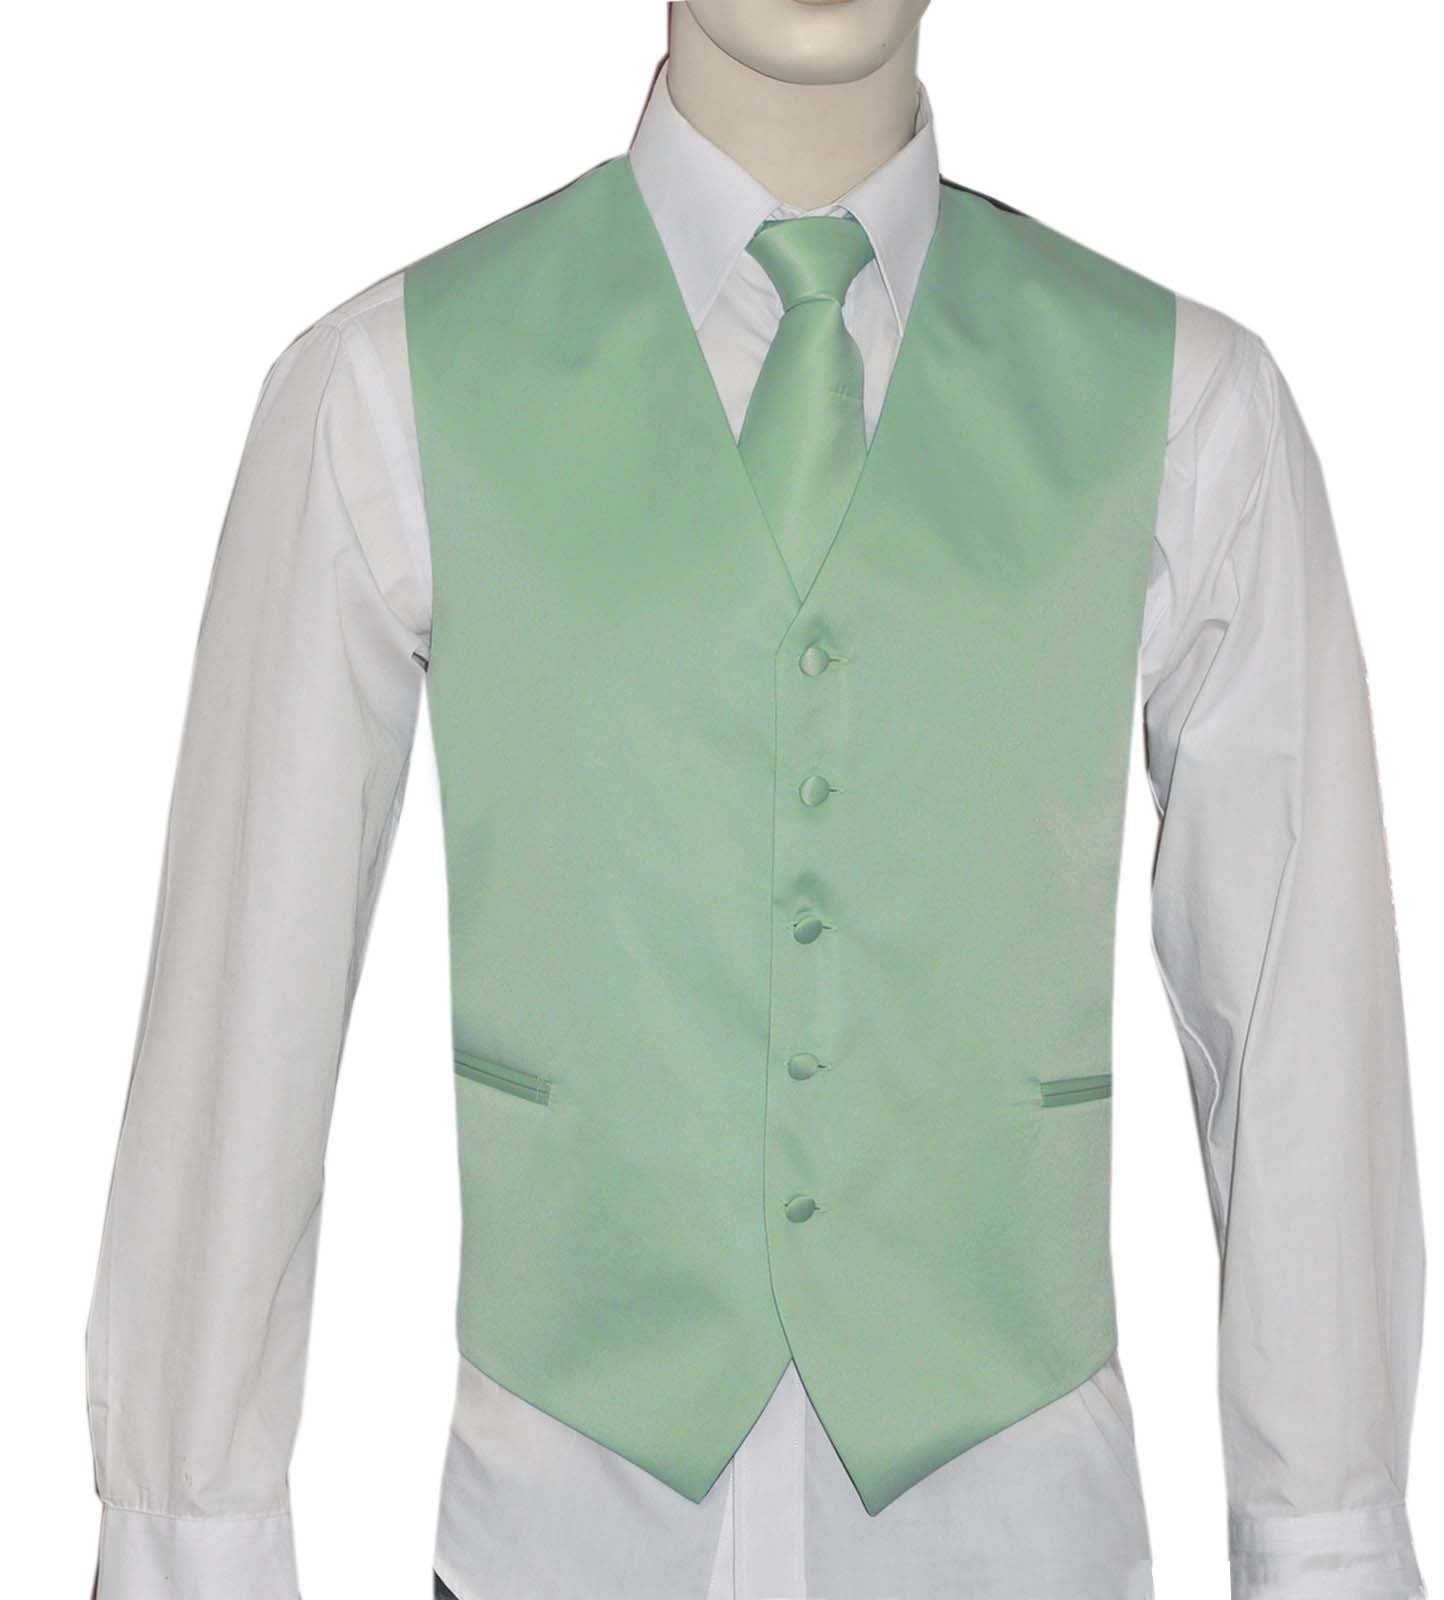  KCT Menswear Mint Green Vest and Tie Set, formal vest and tie set, groom and groomsmen vest and tie set, solid color vest and tie set, formal wear vest and tie set, special occasion vest and tie set.